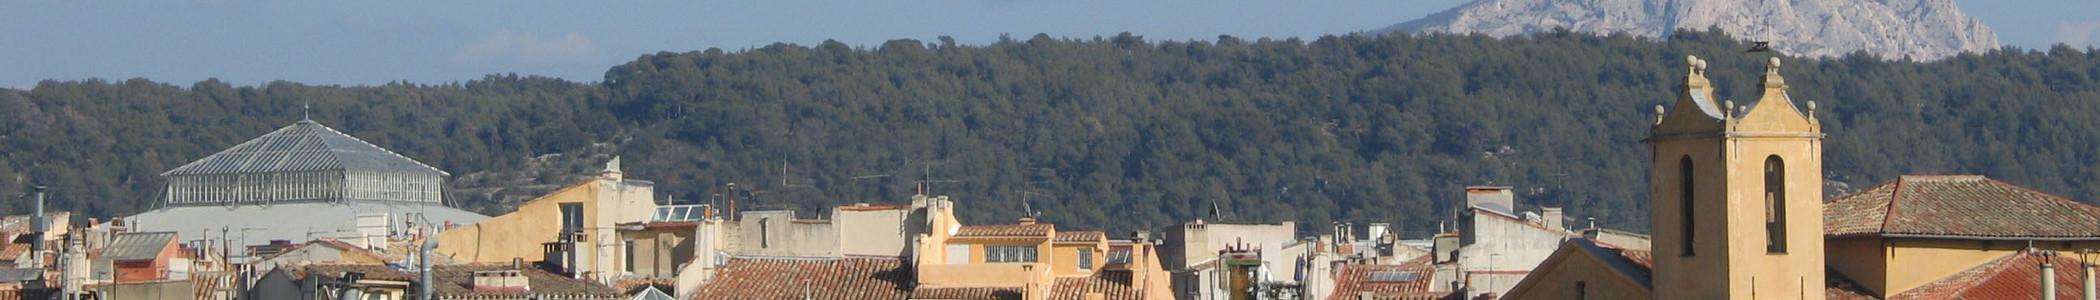 Banner image for Aix-en-Provence on GigsGuide